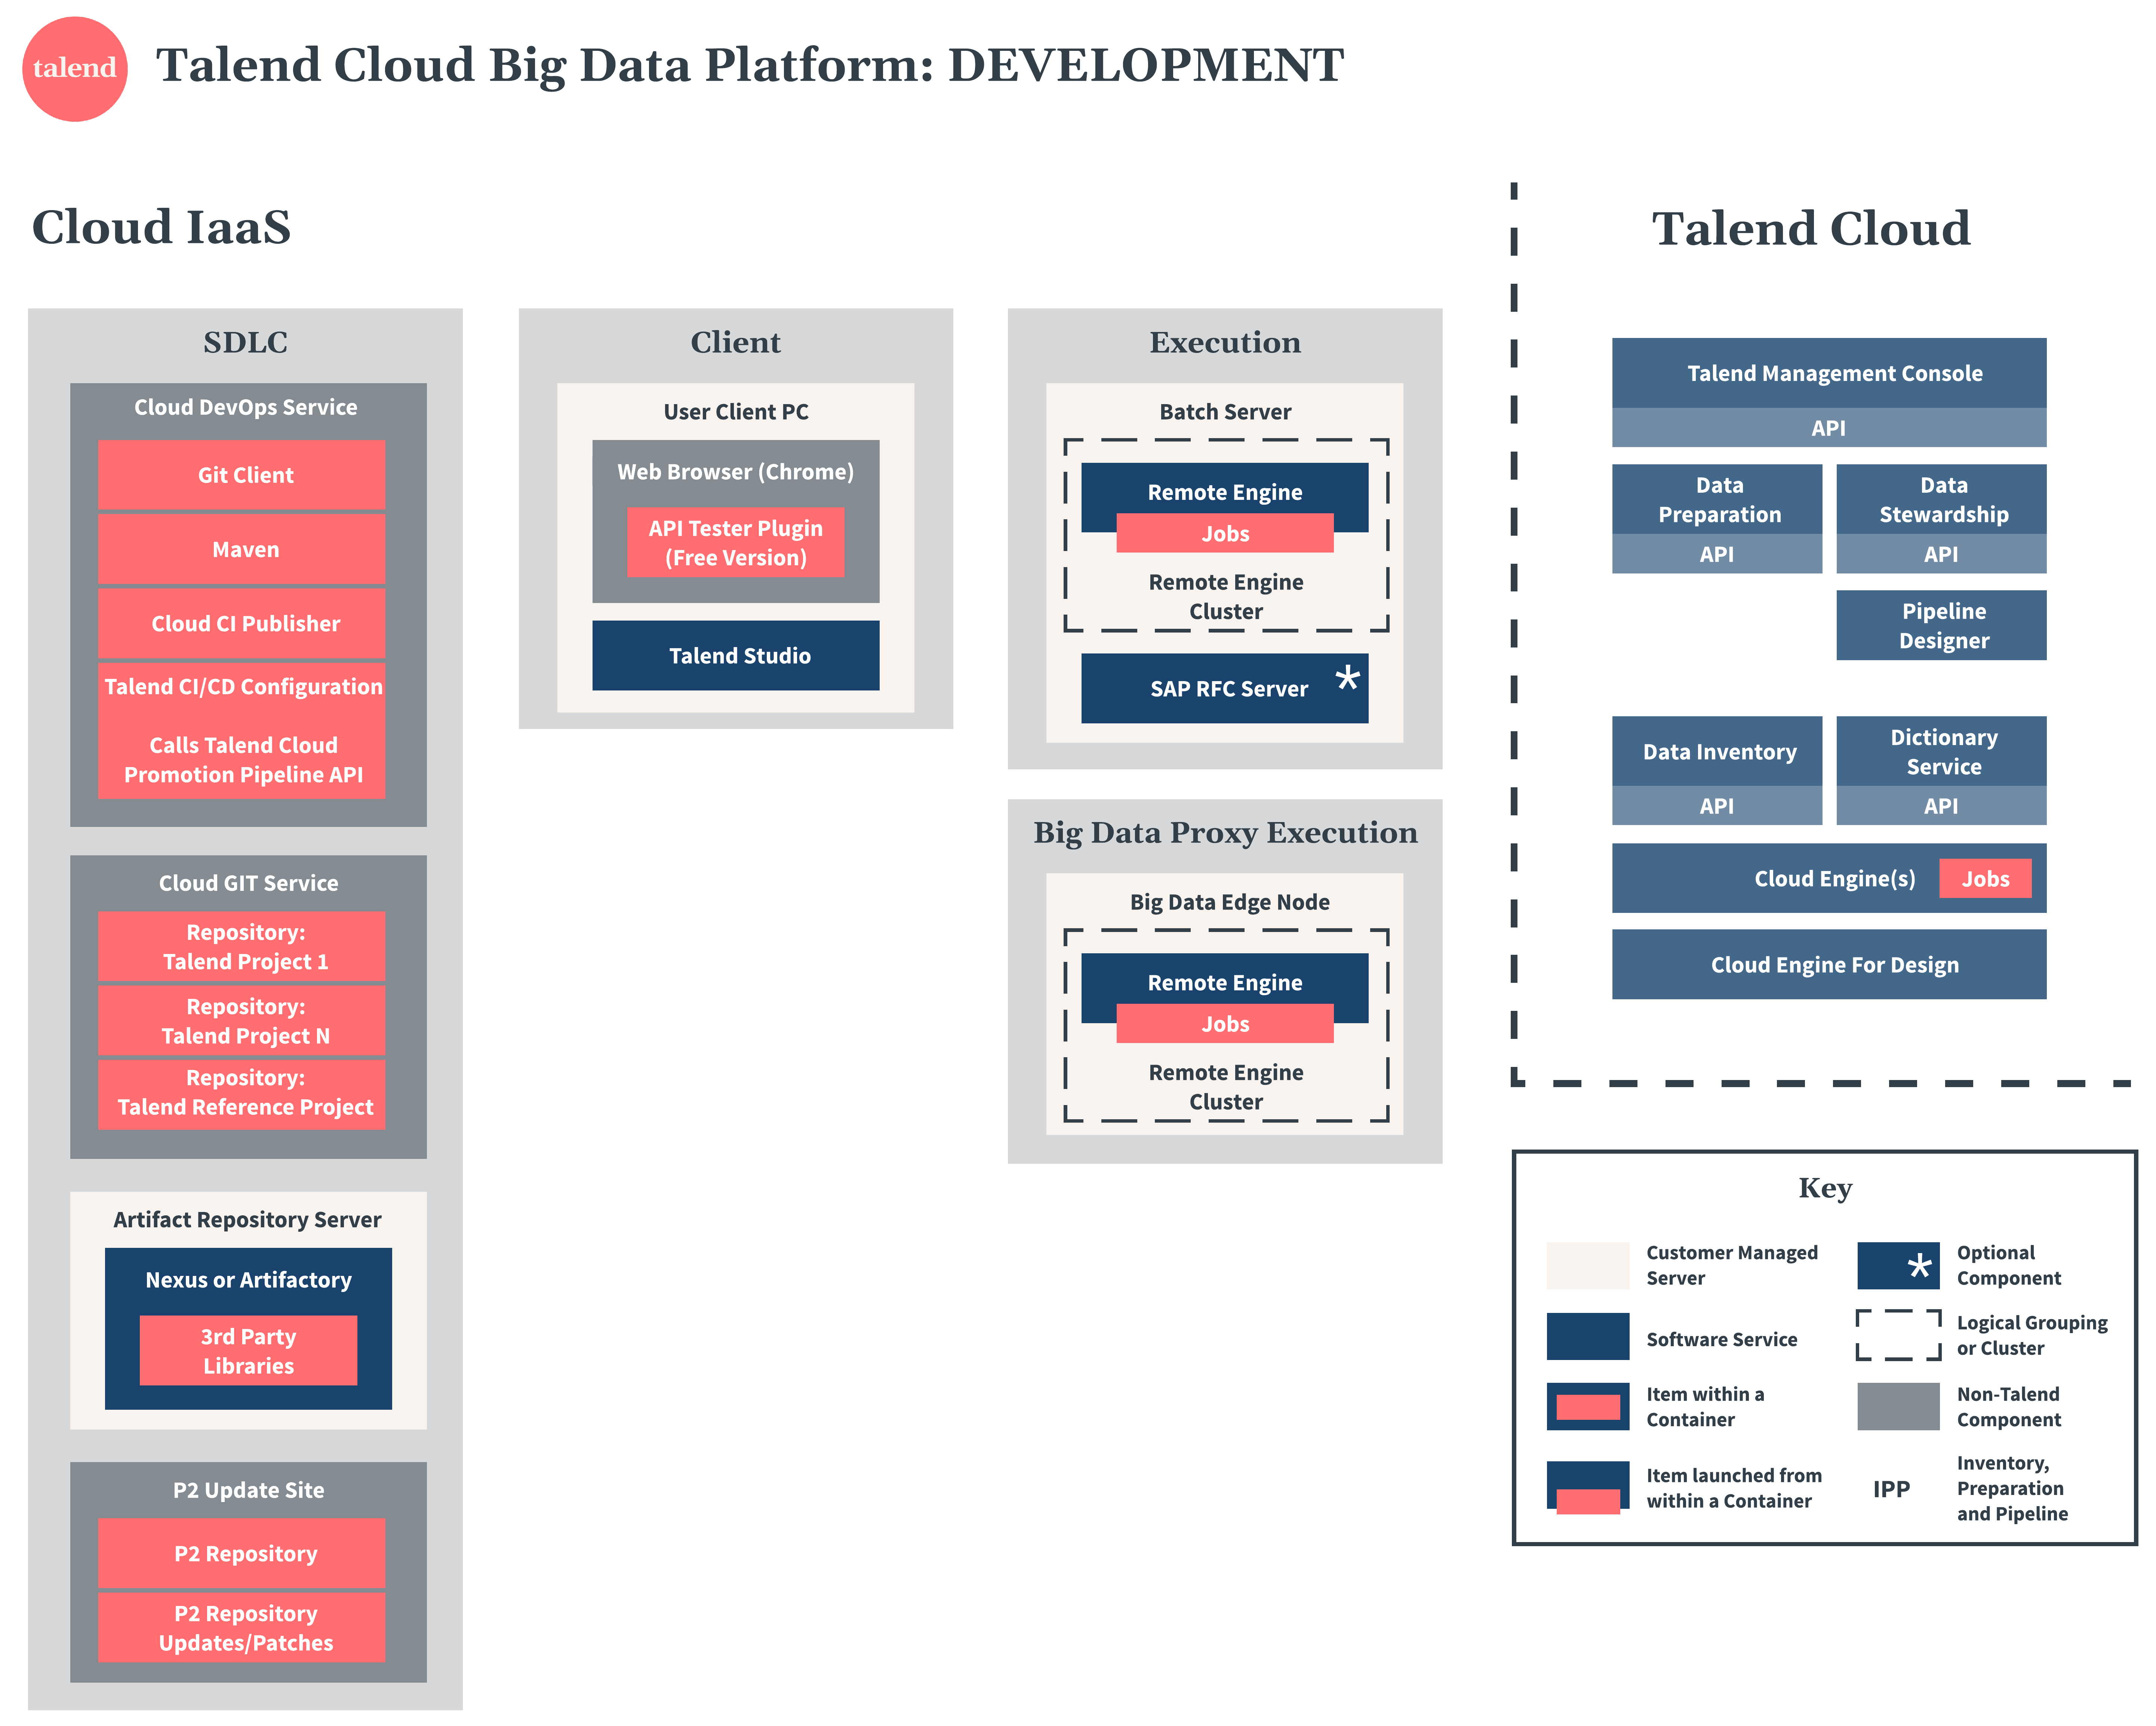 Talend Cloud Big Data Platform Diagramm zu Entwicklung.